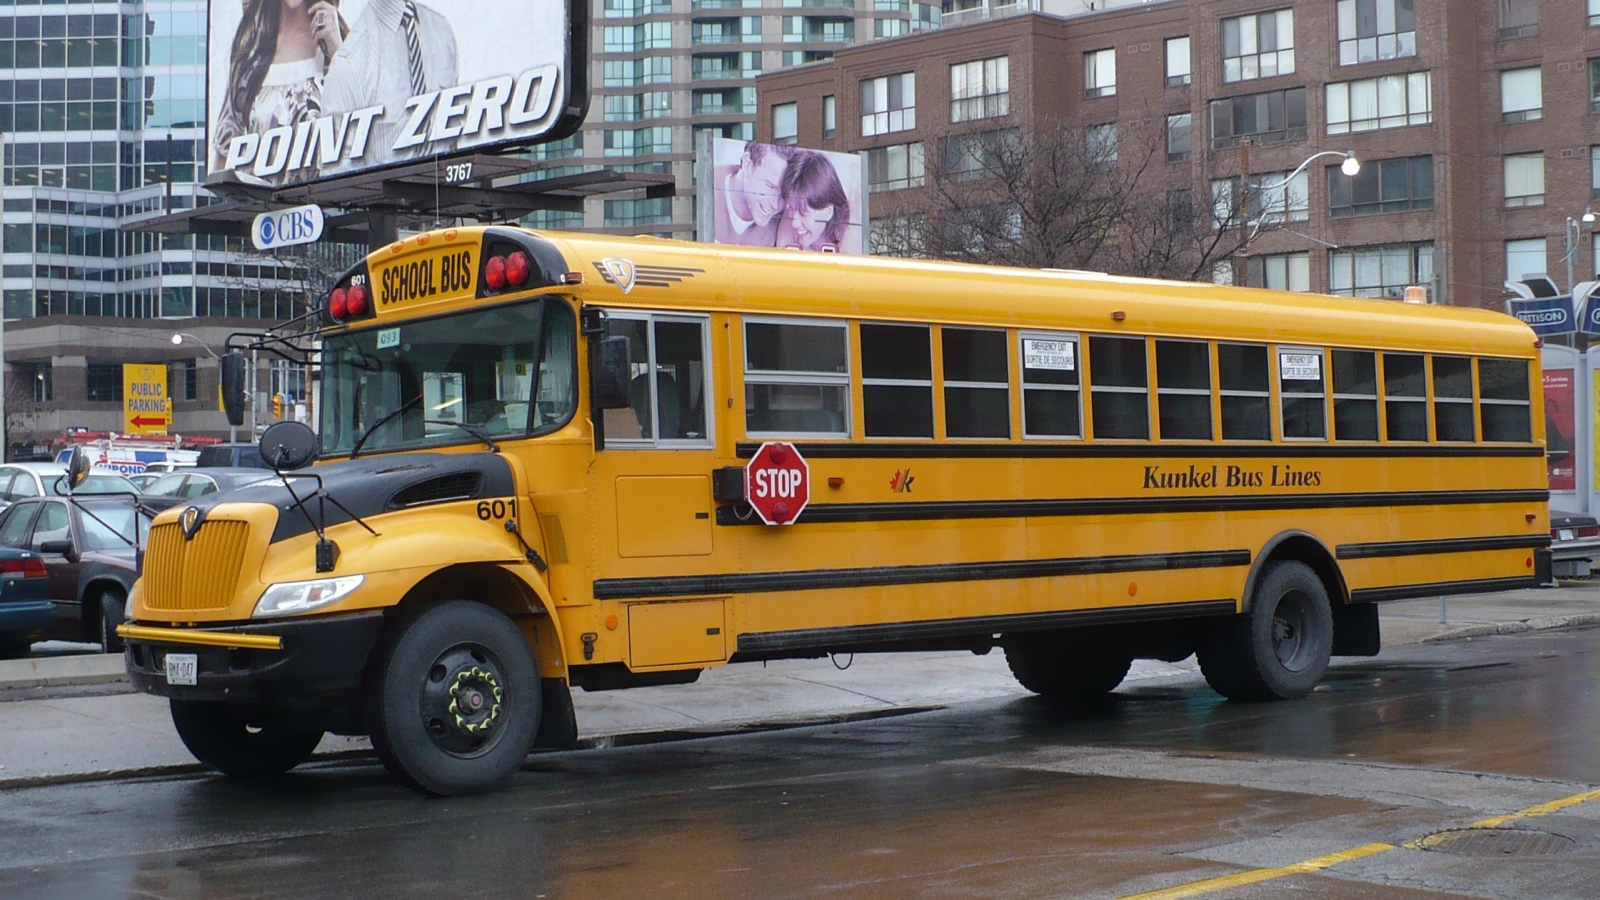 English: Kunkel Bus Lines yellow school bus